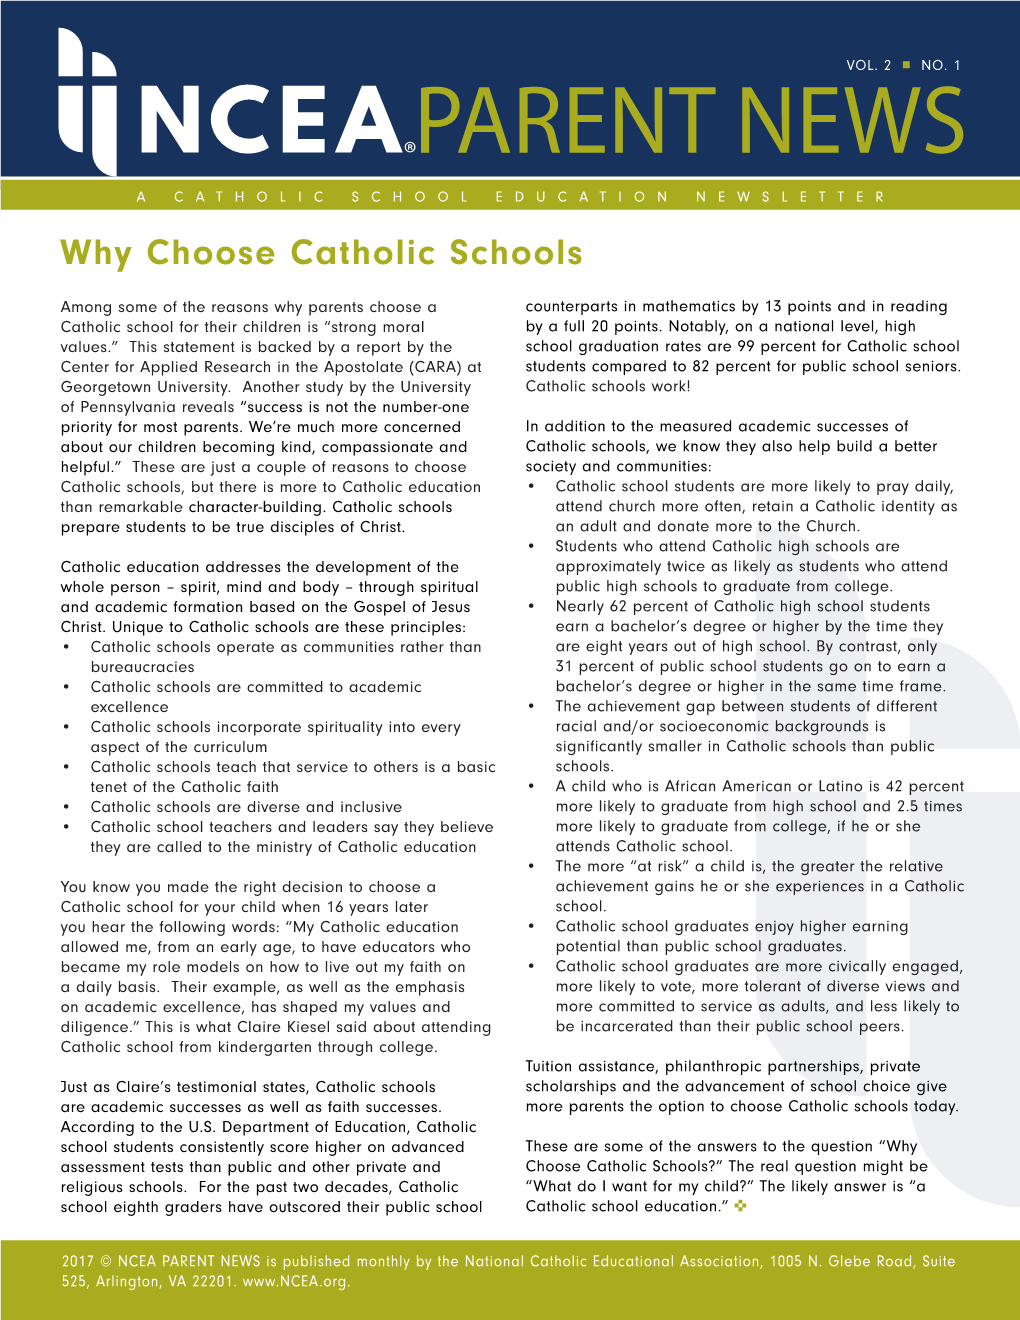 Why Choose Catholic Schools